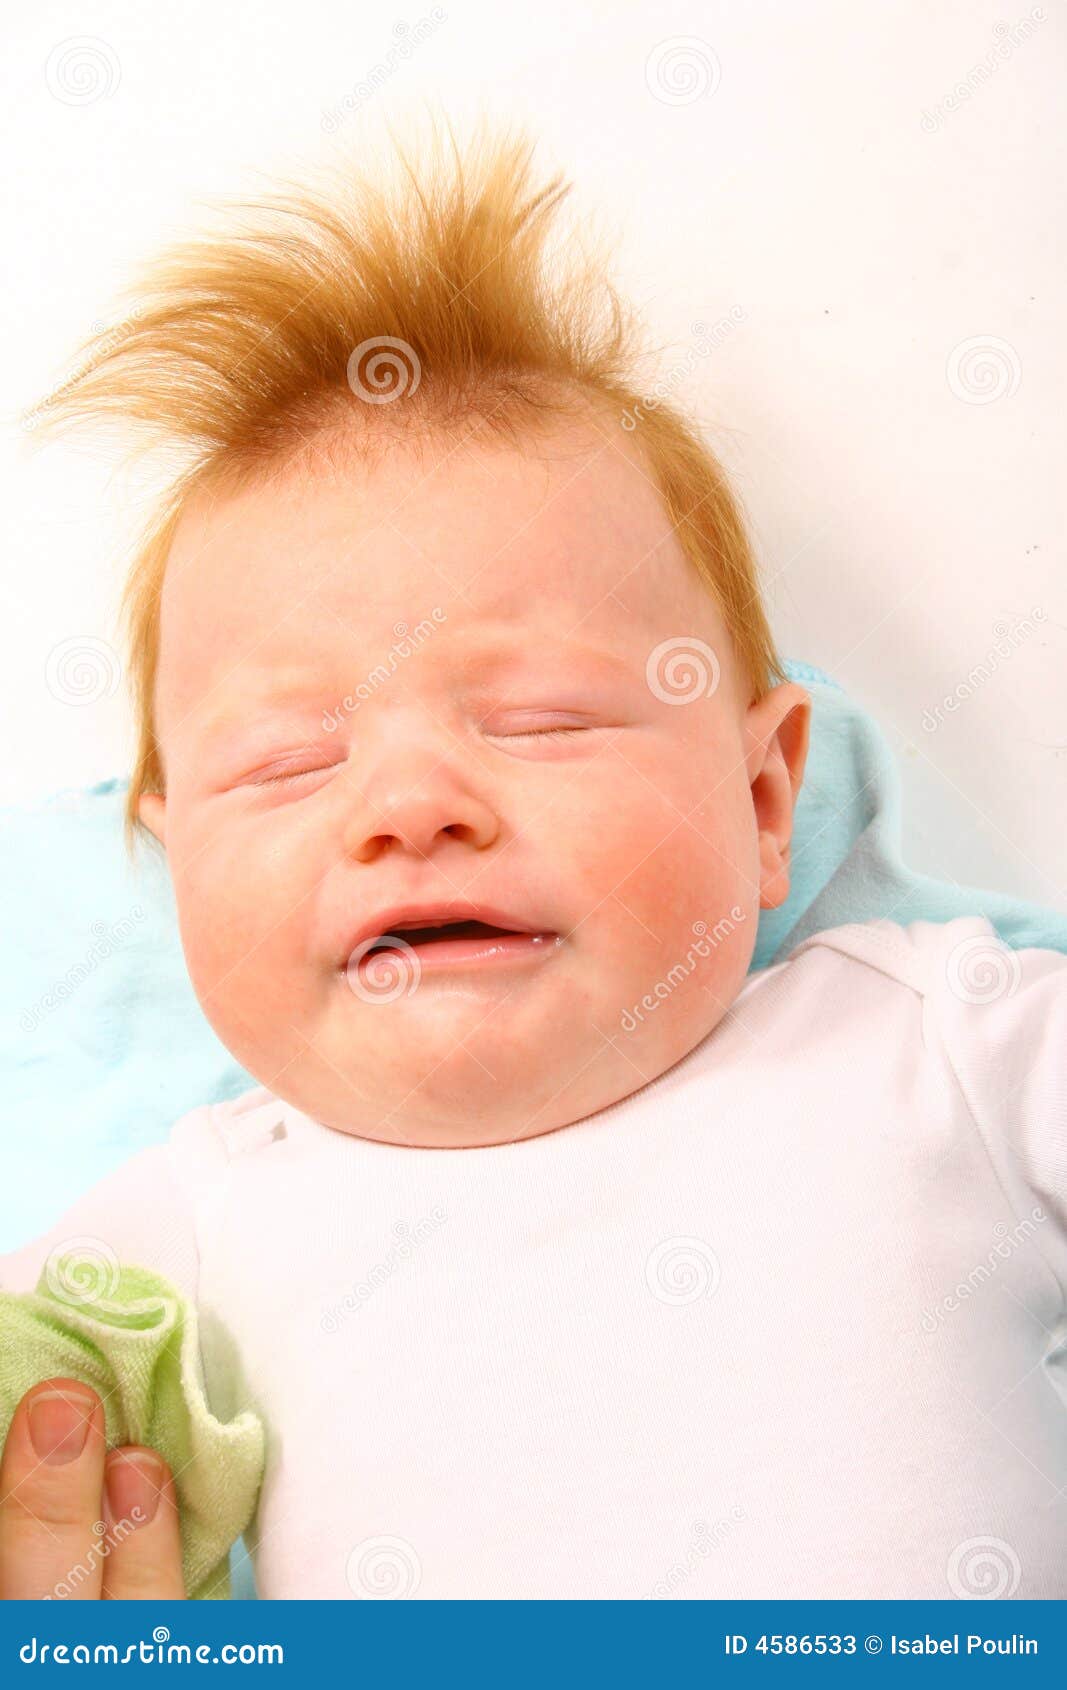 Crying Baby Stock Photos - Image: 4586533